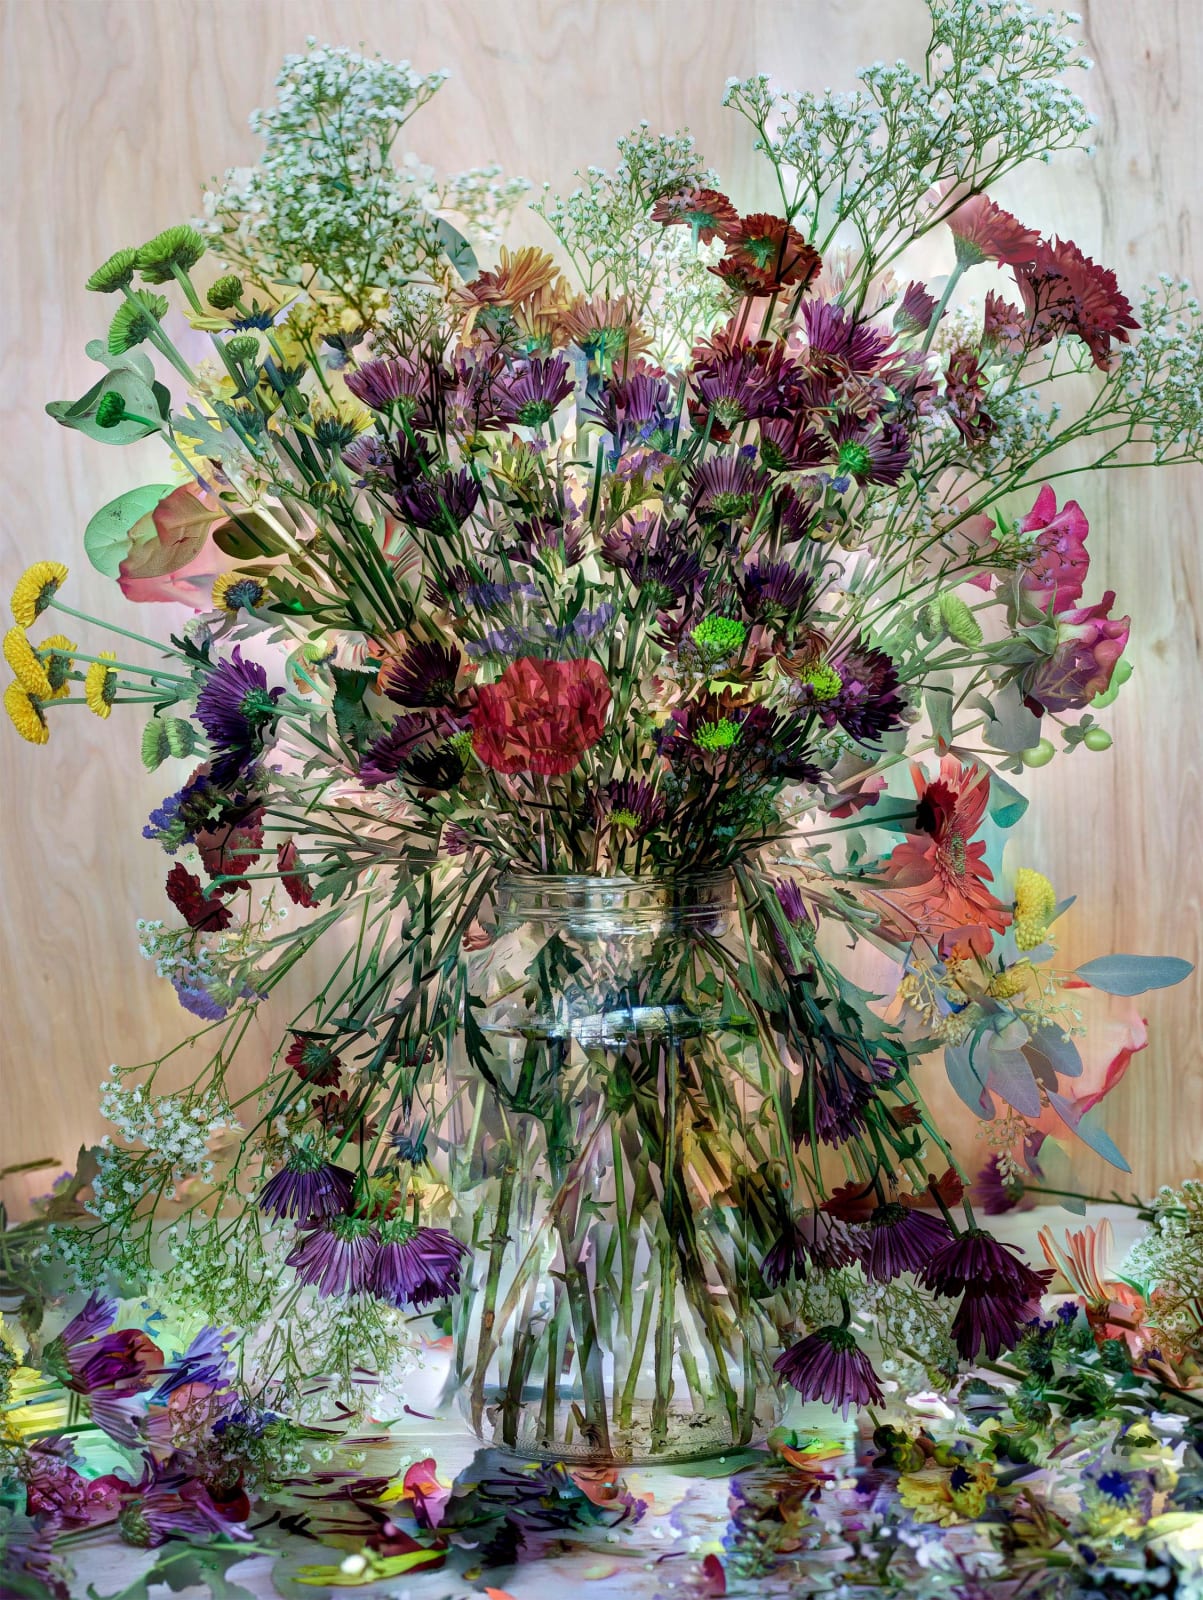 Abelardo Morell Flowers for Lisa #2 digitally composed multiple negative floral still life in vase with autumnal colors